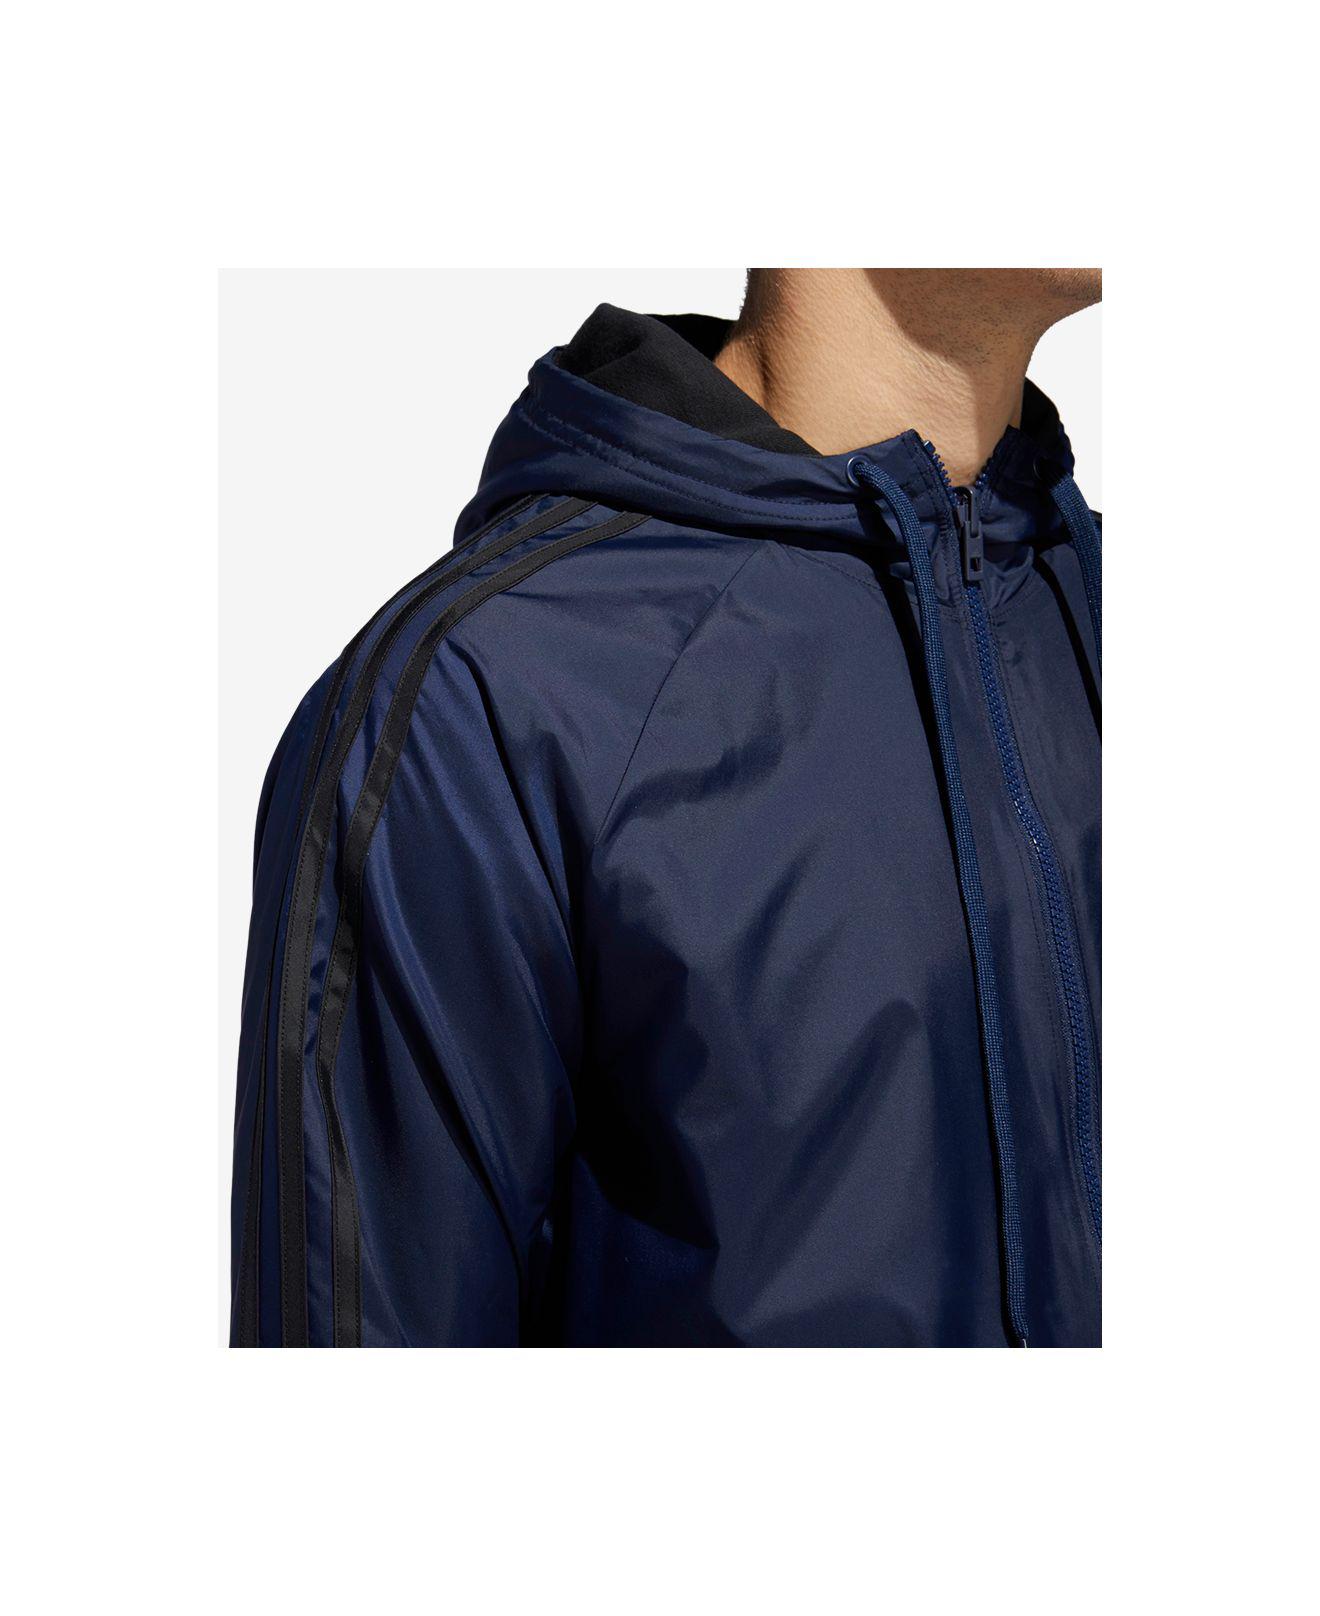 adidas men's reversible hooded jacket